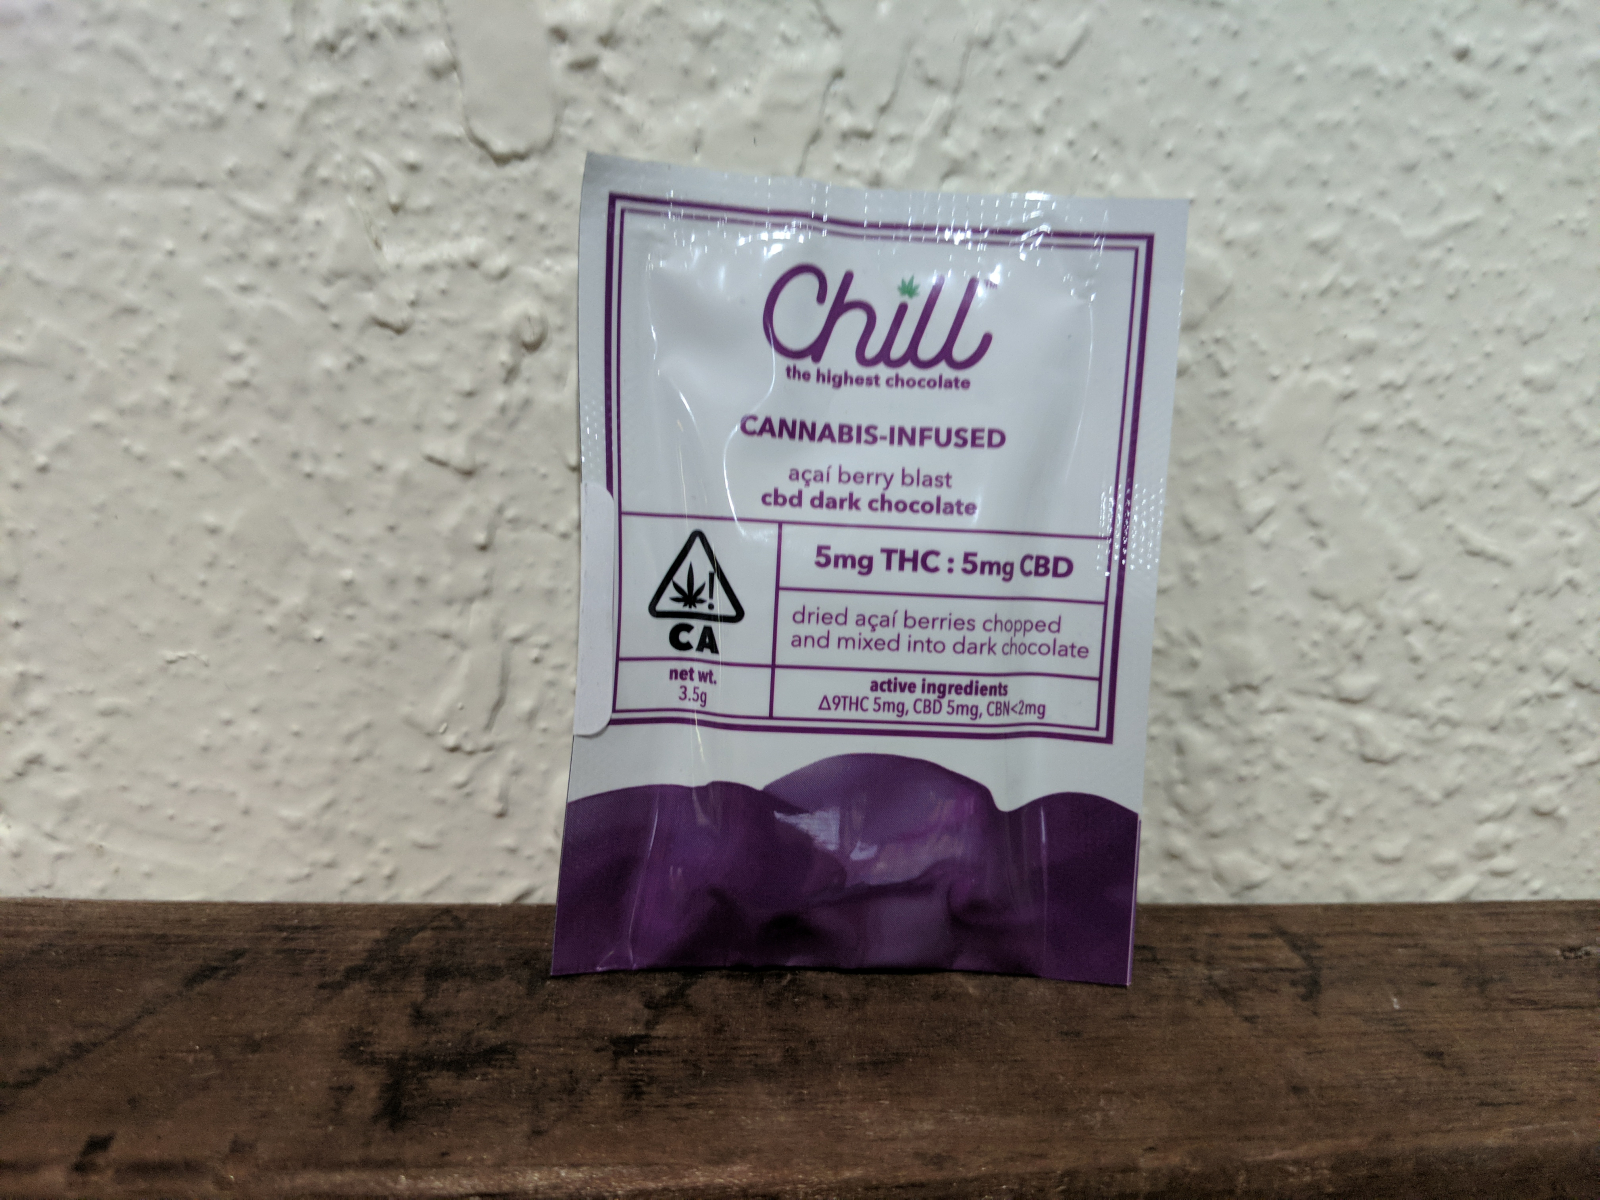 Chill chocolate 1:1 5mg CBD 5mg THC